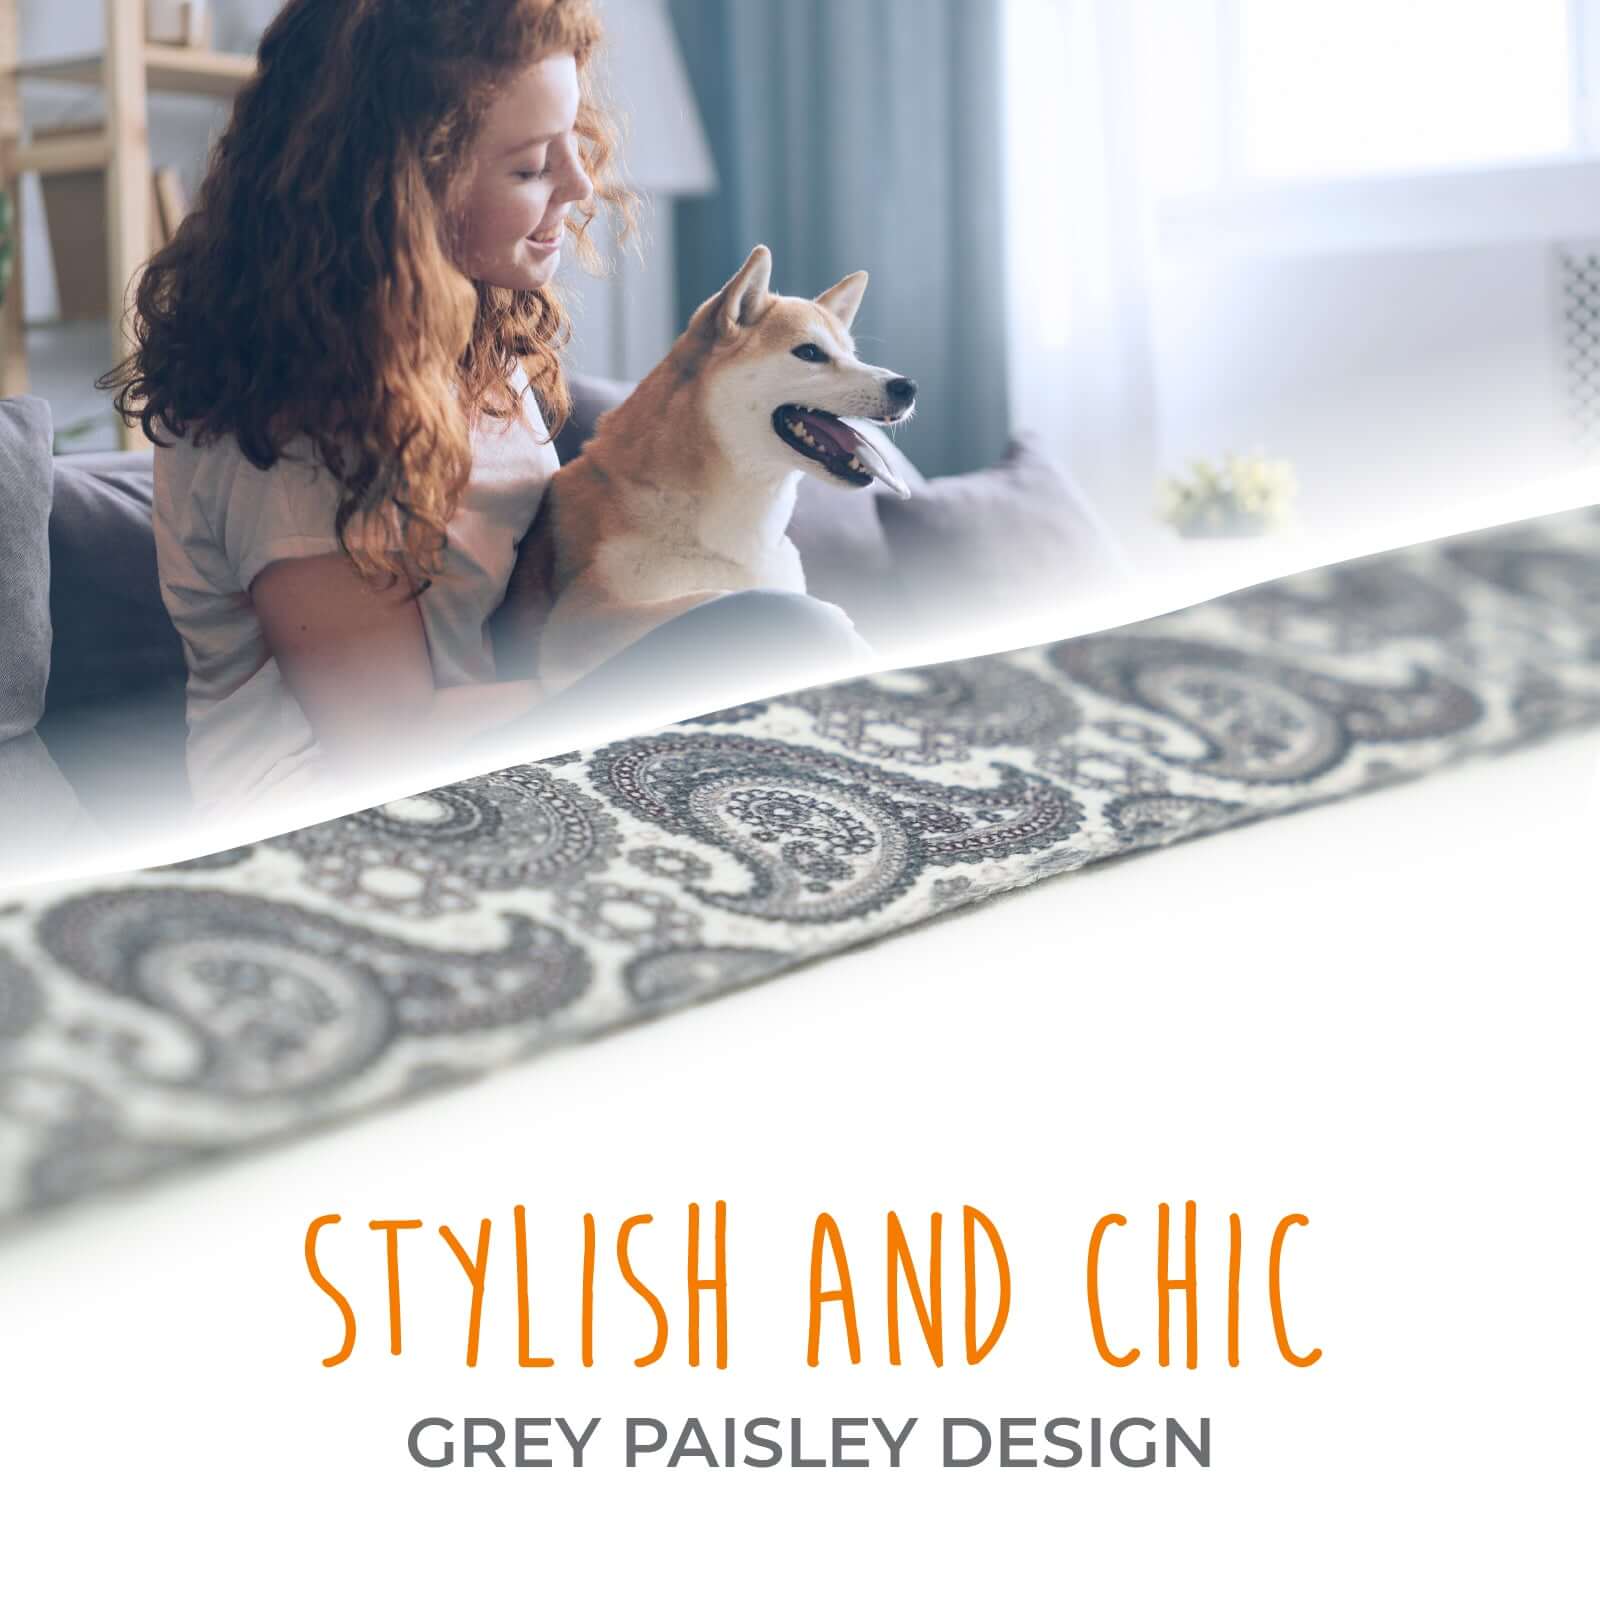 6' Grey Paisley Designer Dog Leash with All-Metal Hardware